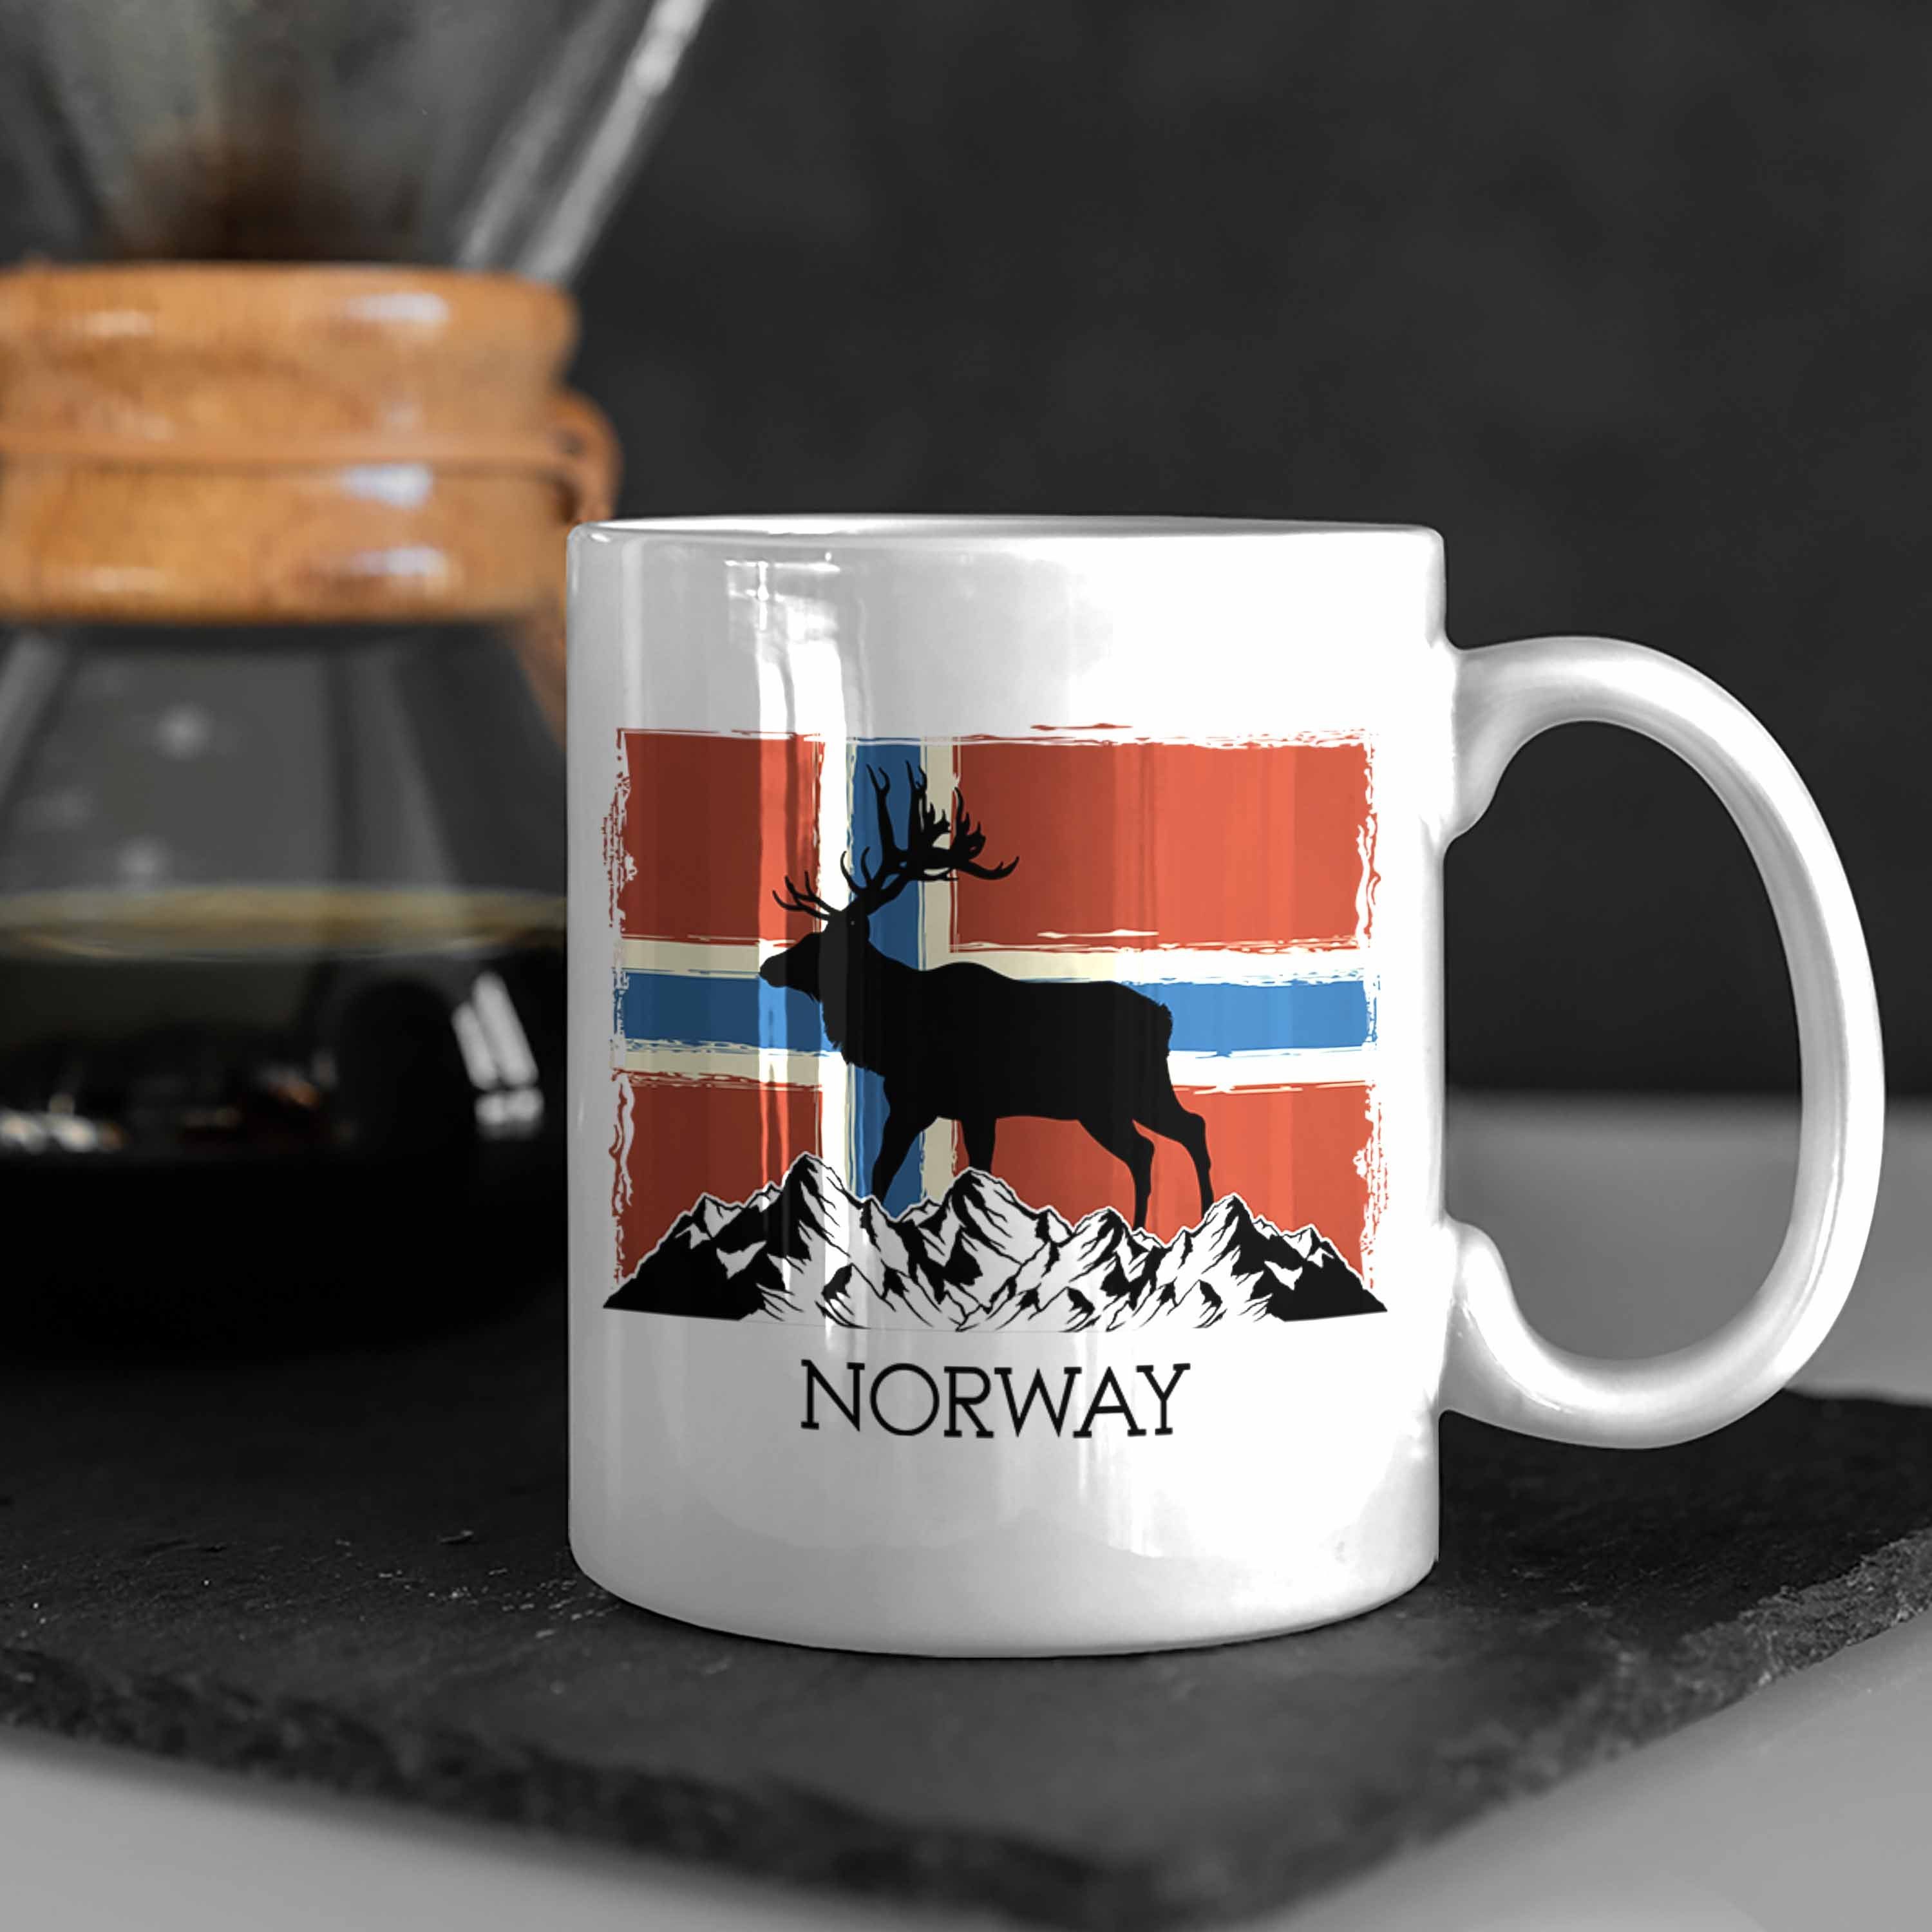 Trendation Tasse Trendation - Norwegen Flagge Geschenke Tasse Nordkap Weiss Norway Elch